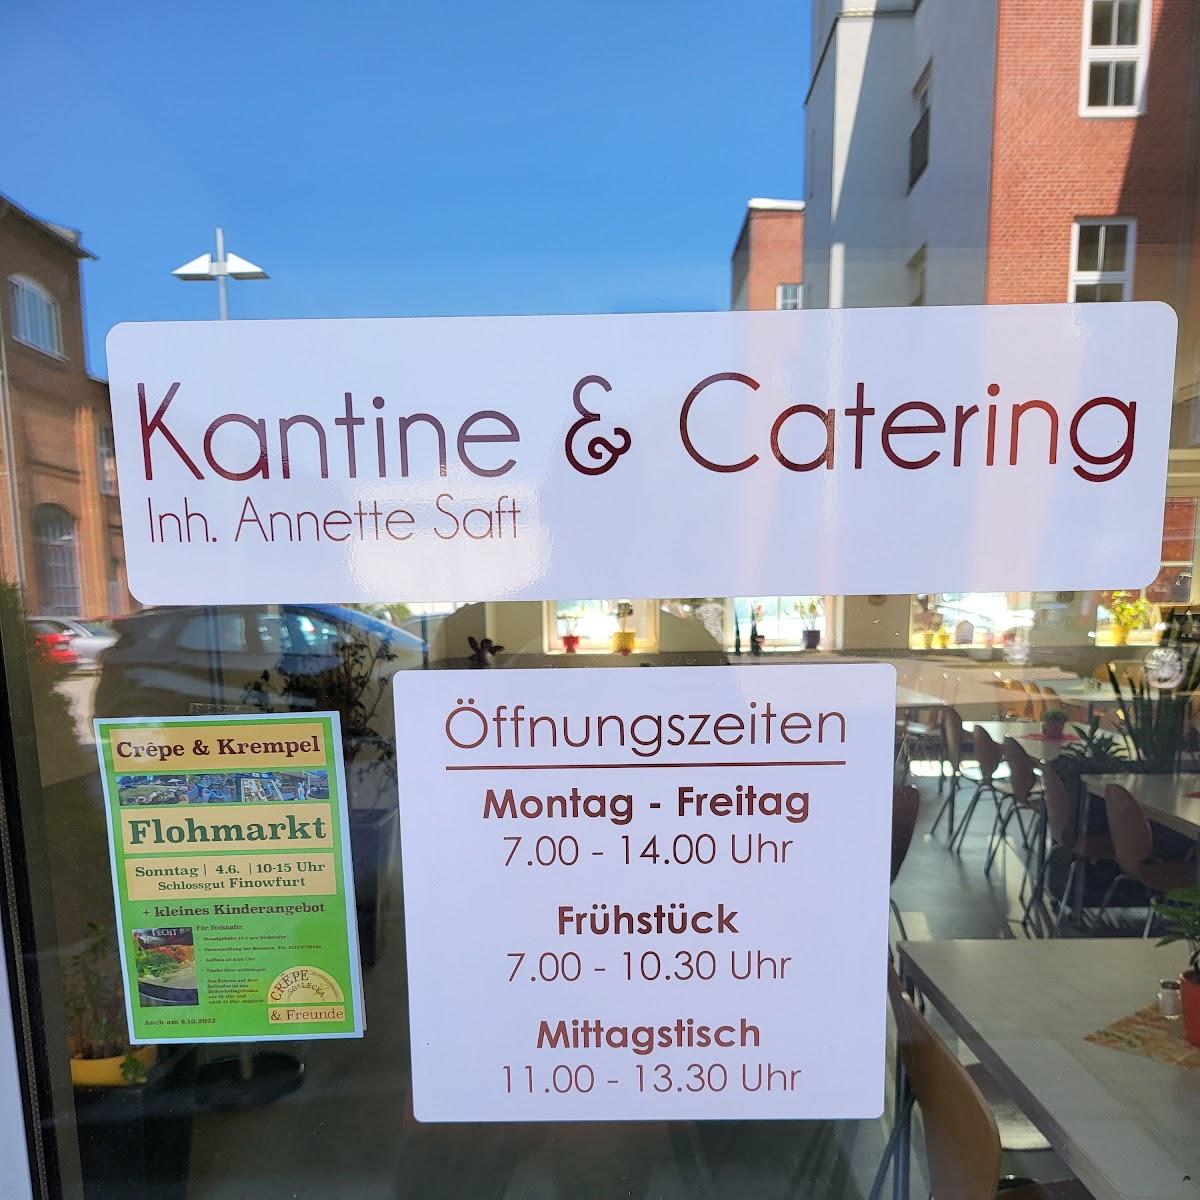 Restaurant "Kantine & Catering" in Eberswalde